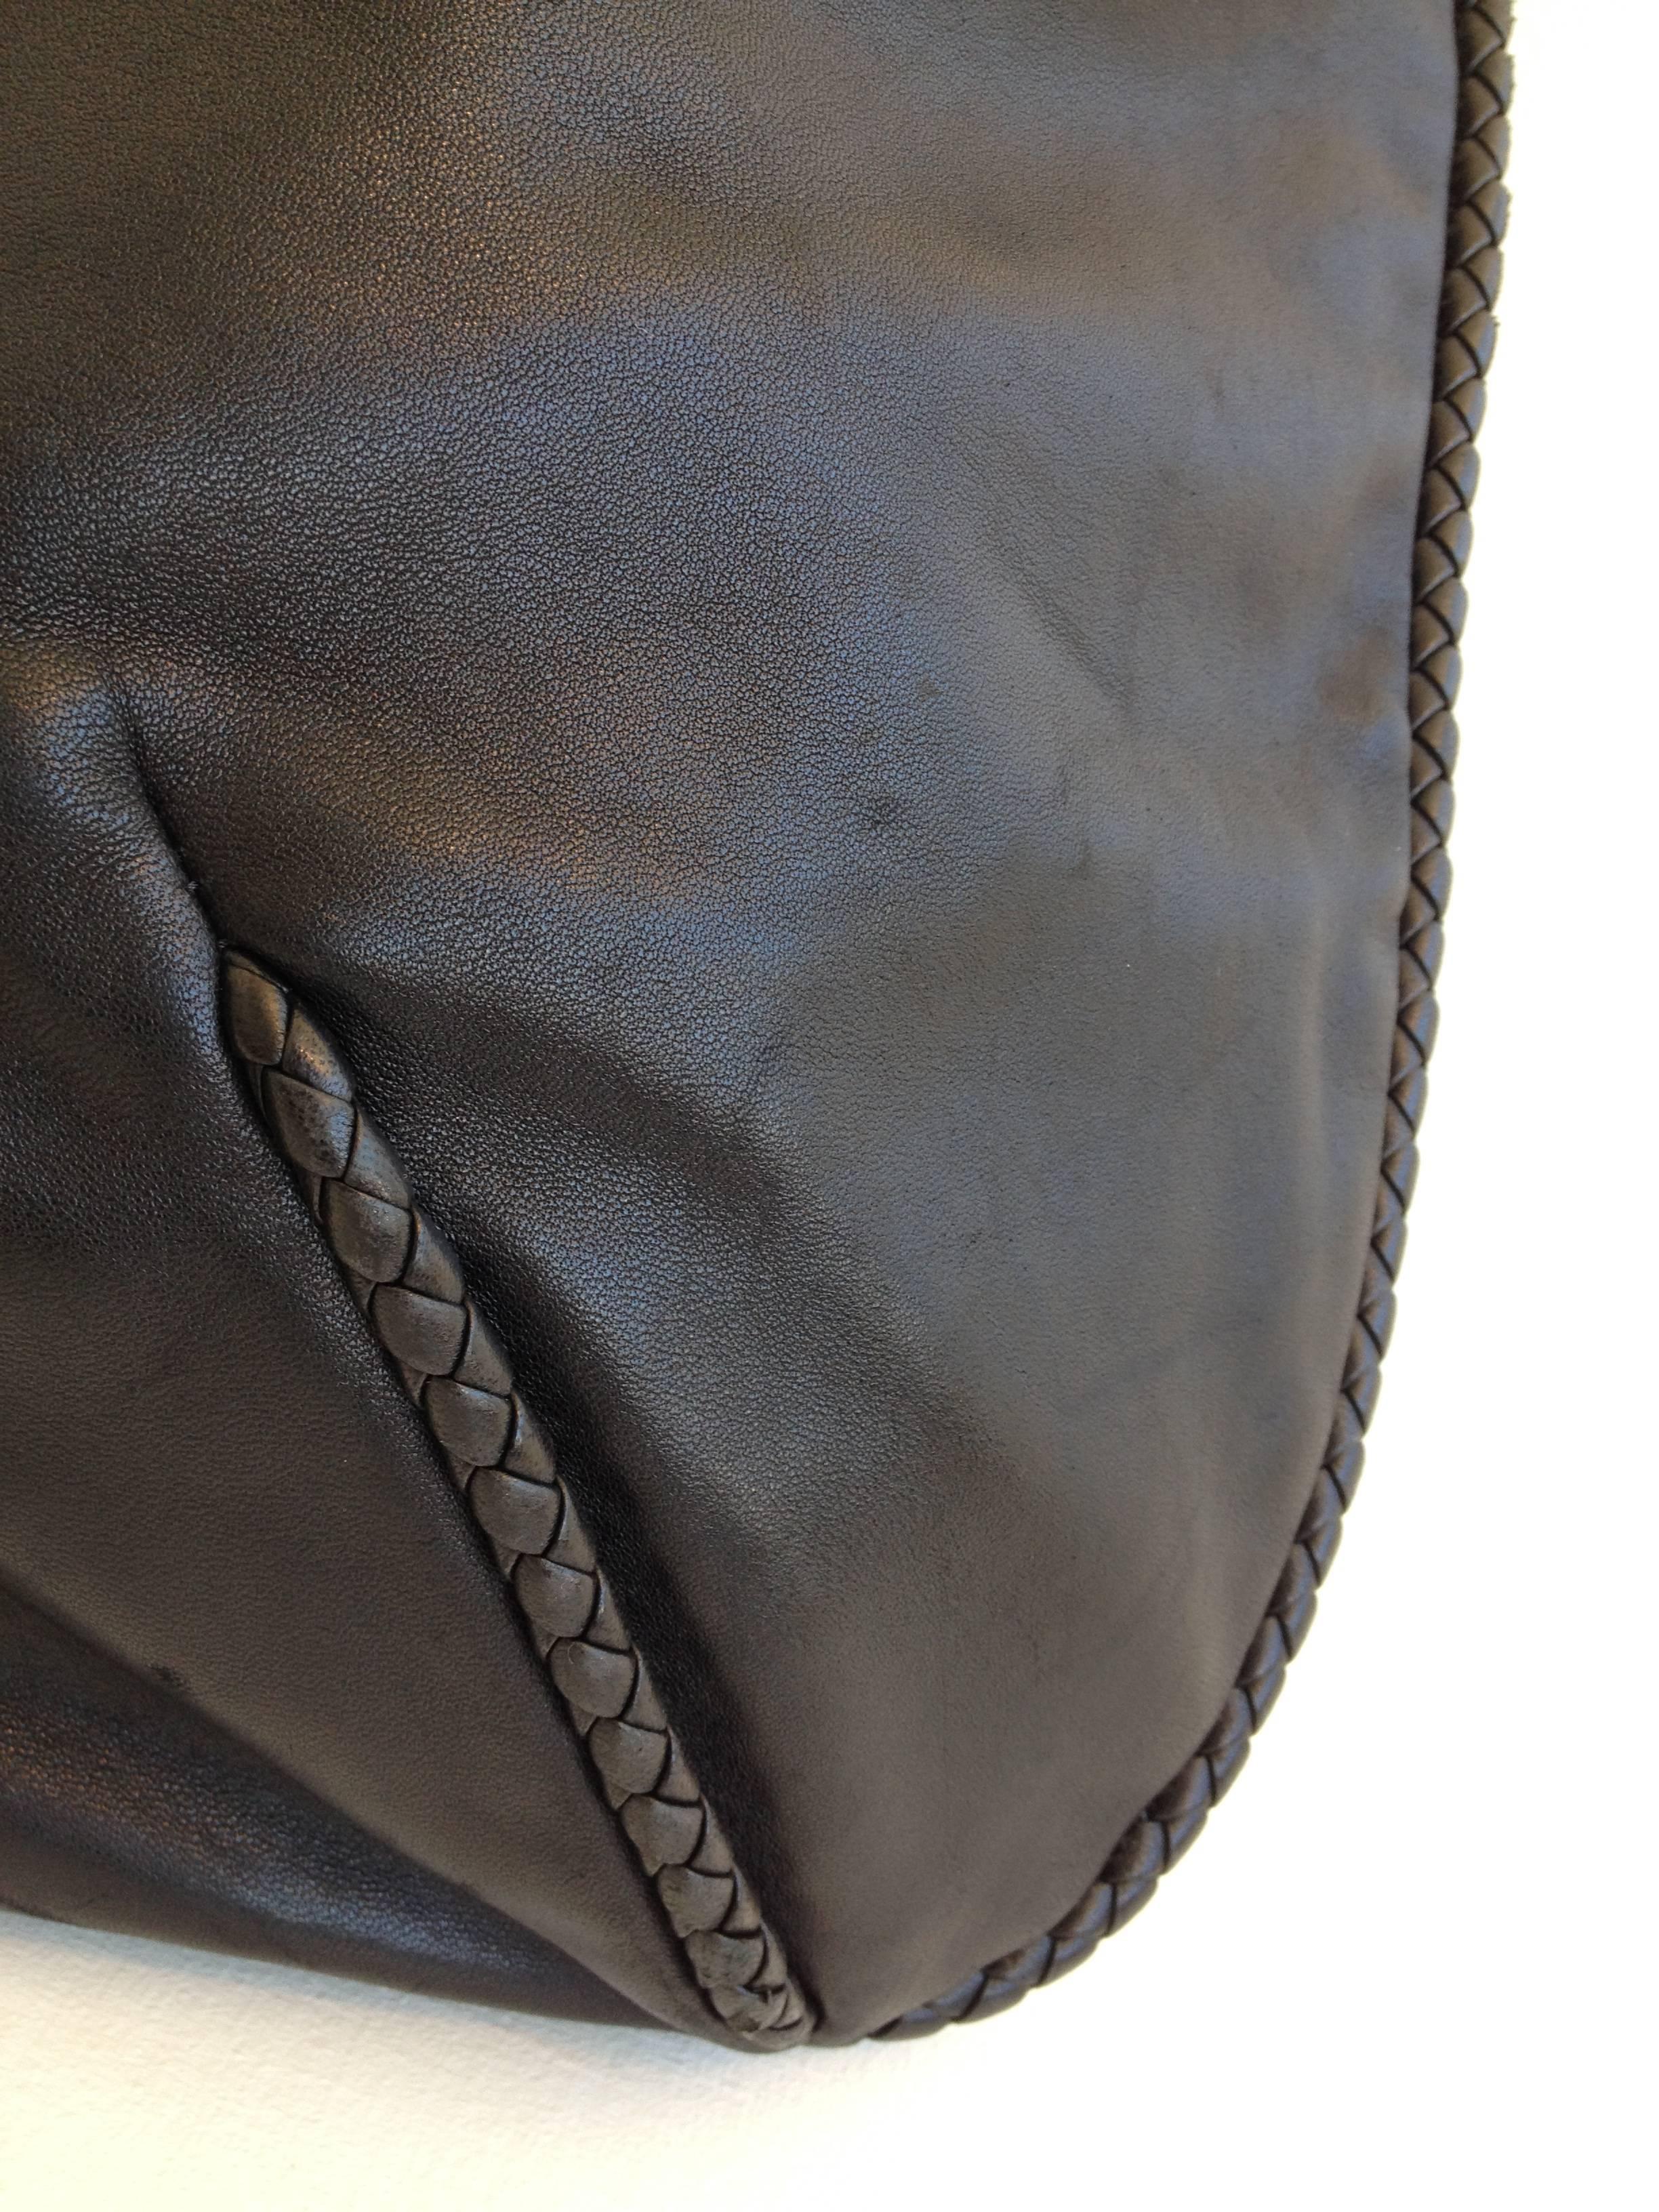 Bottega Veneta Black Leather Hobo Bag With Intracciato Details 2